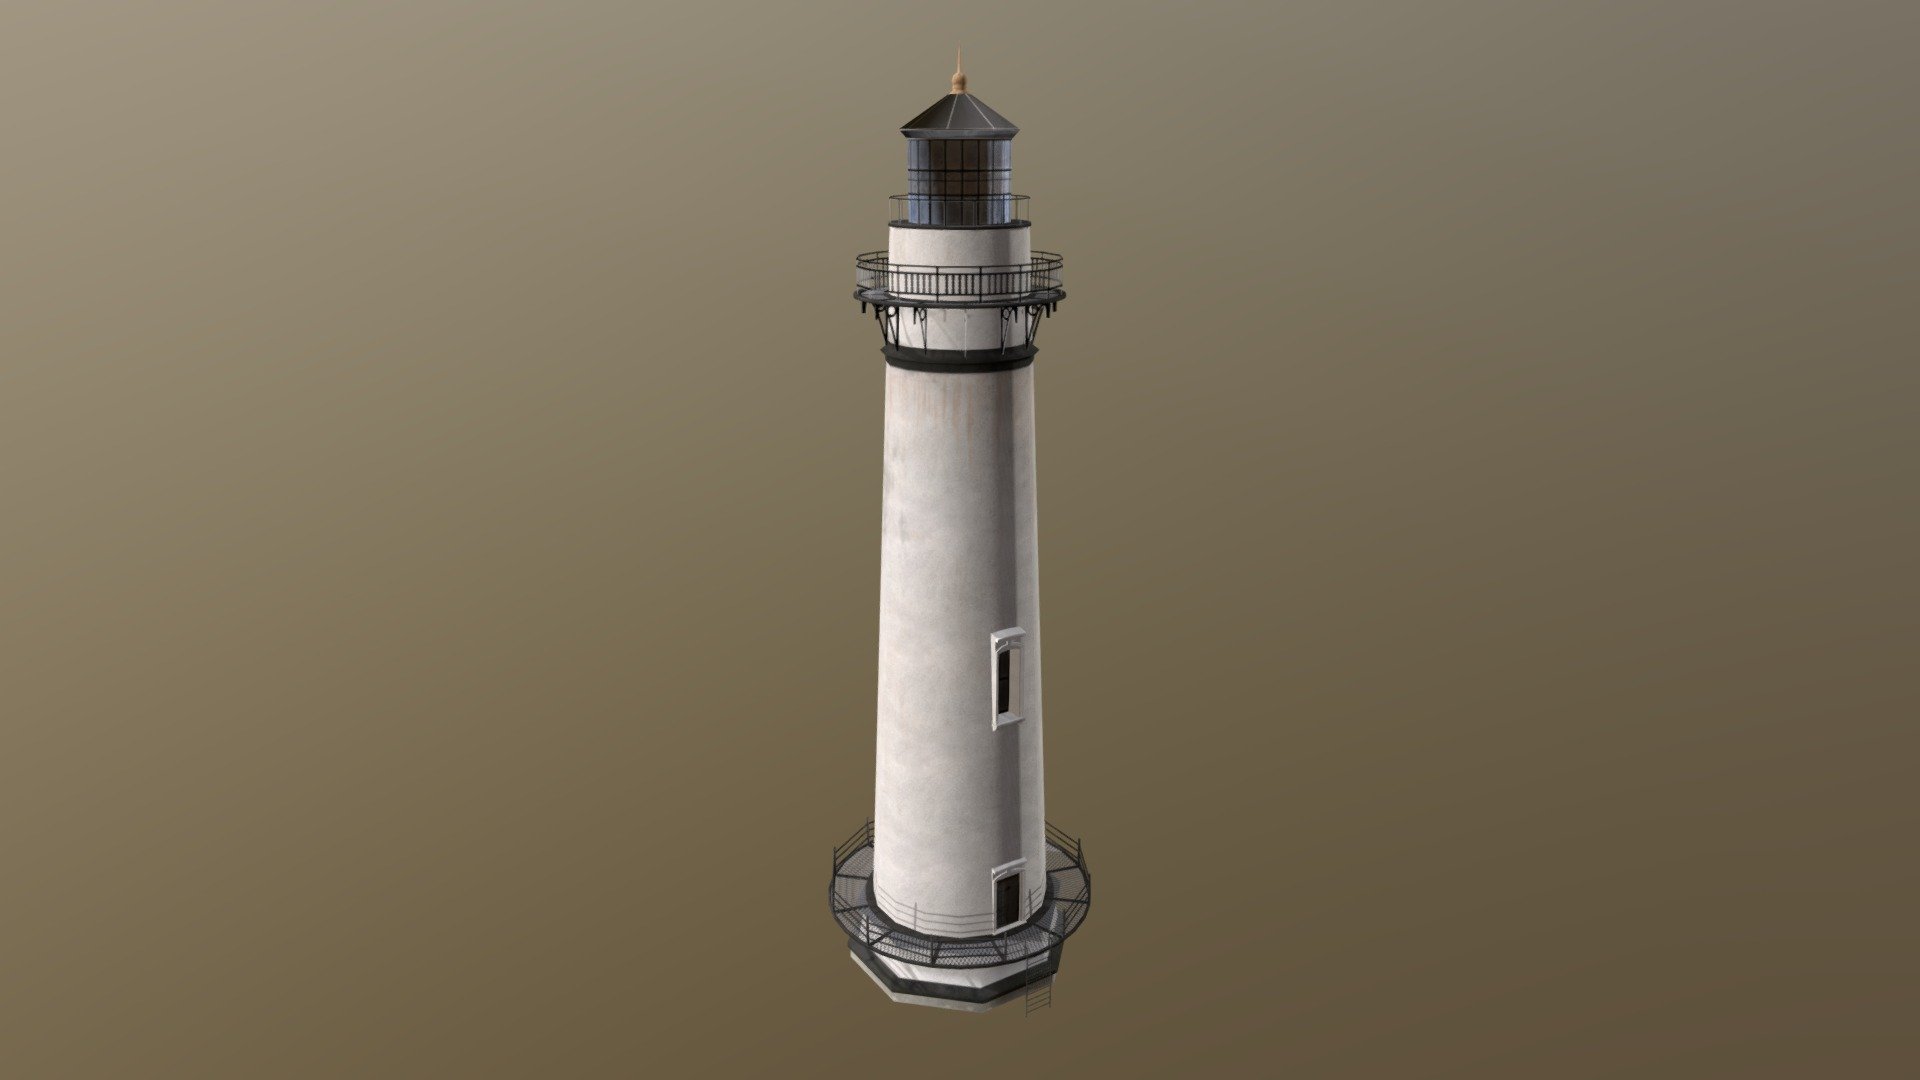 A 19th century lighthouse 3d model